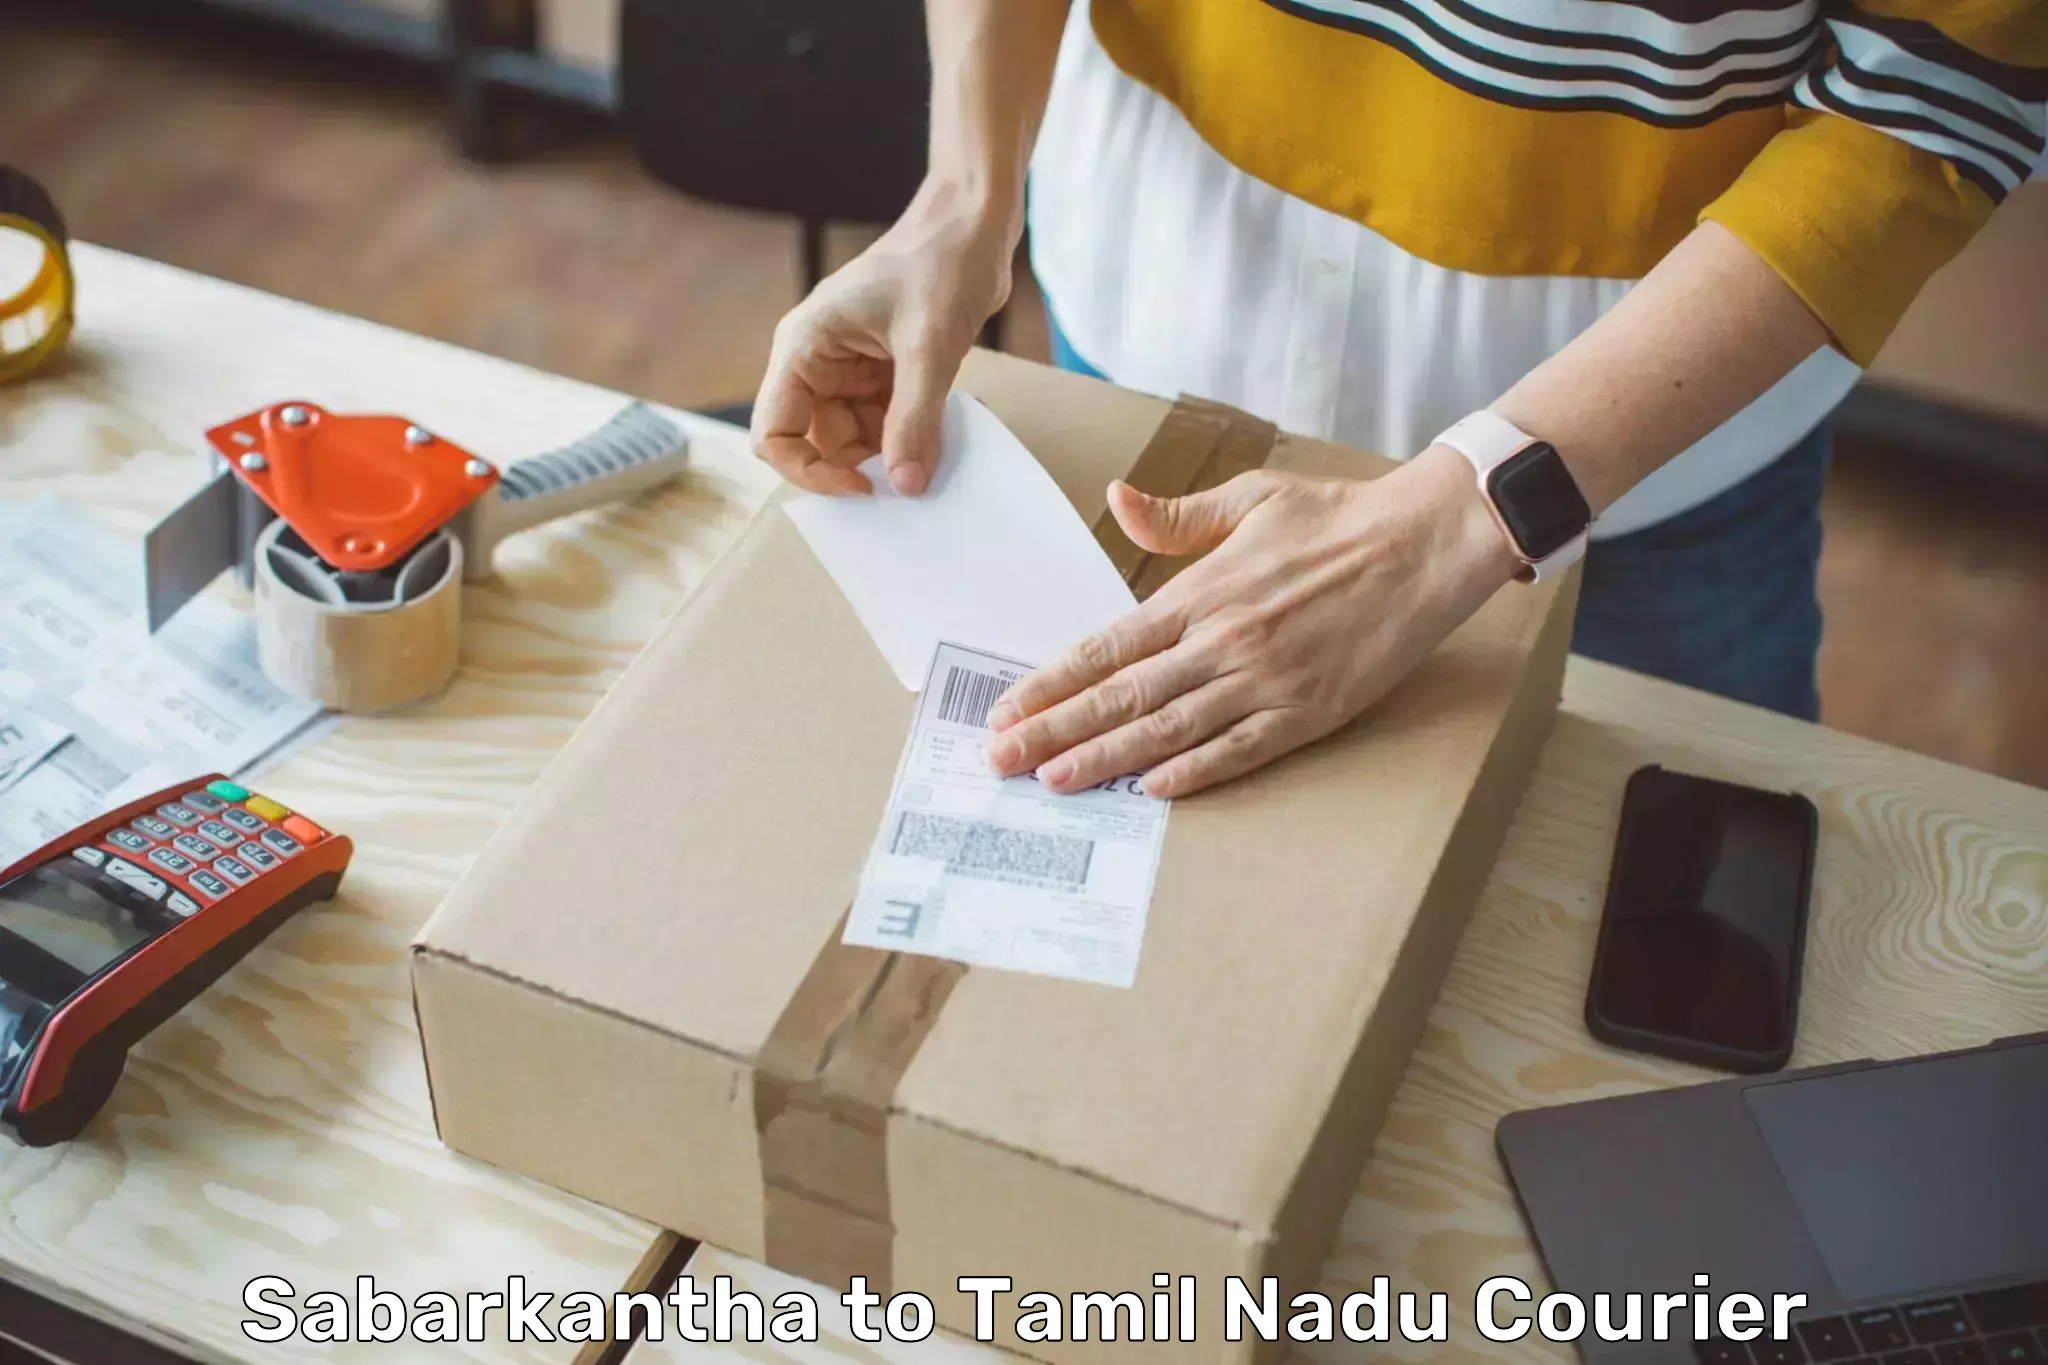 Efficient order fulfillment Sabarkantha to Tamil Nadu